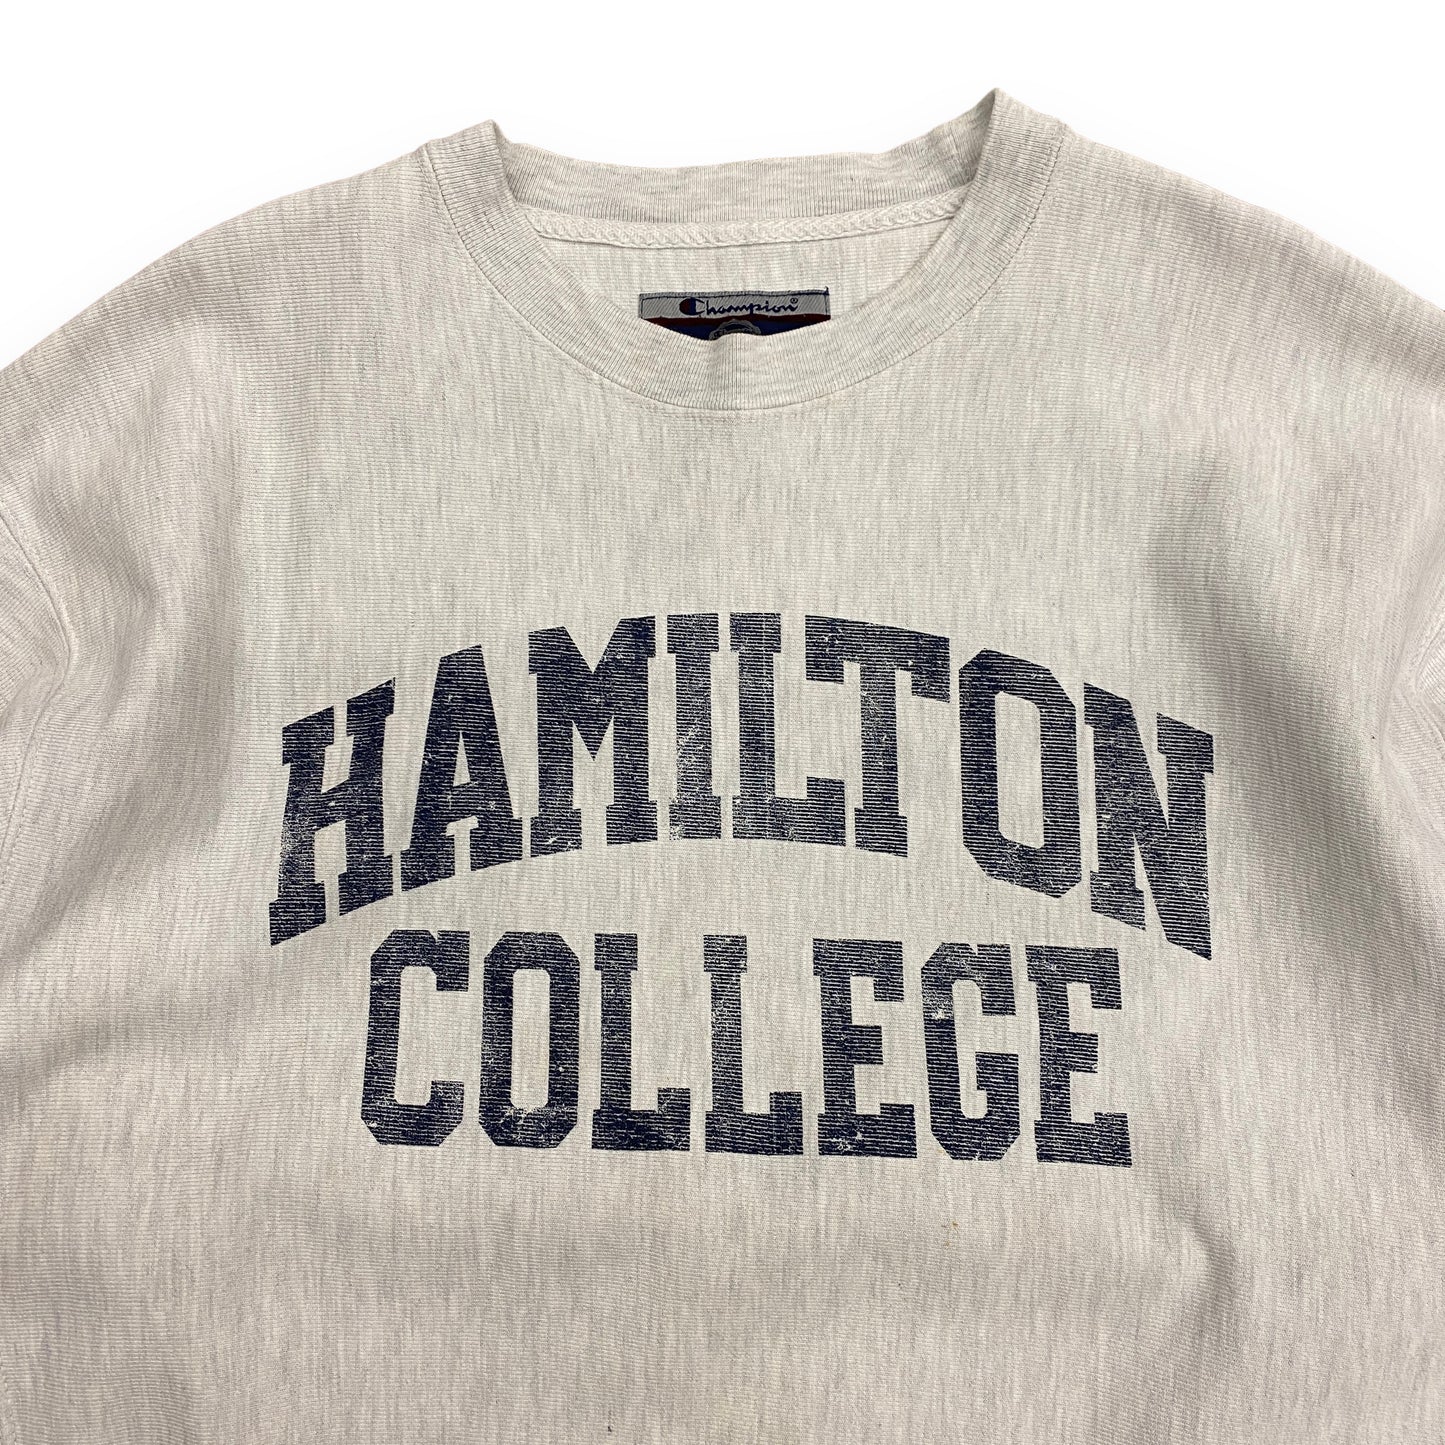 Vintage Champion Reverse Weave "Hamilton College" Crewneck Sweatshirt - Size Large